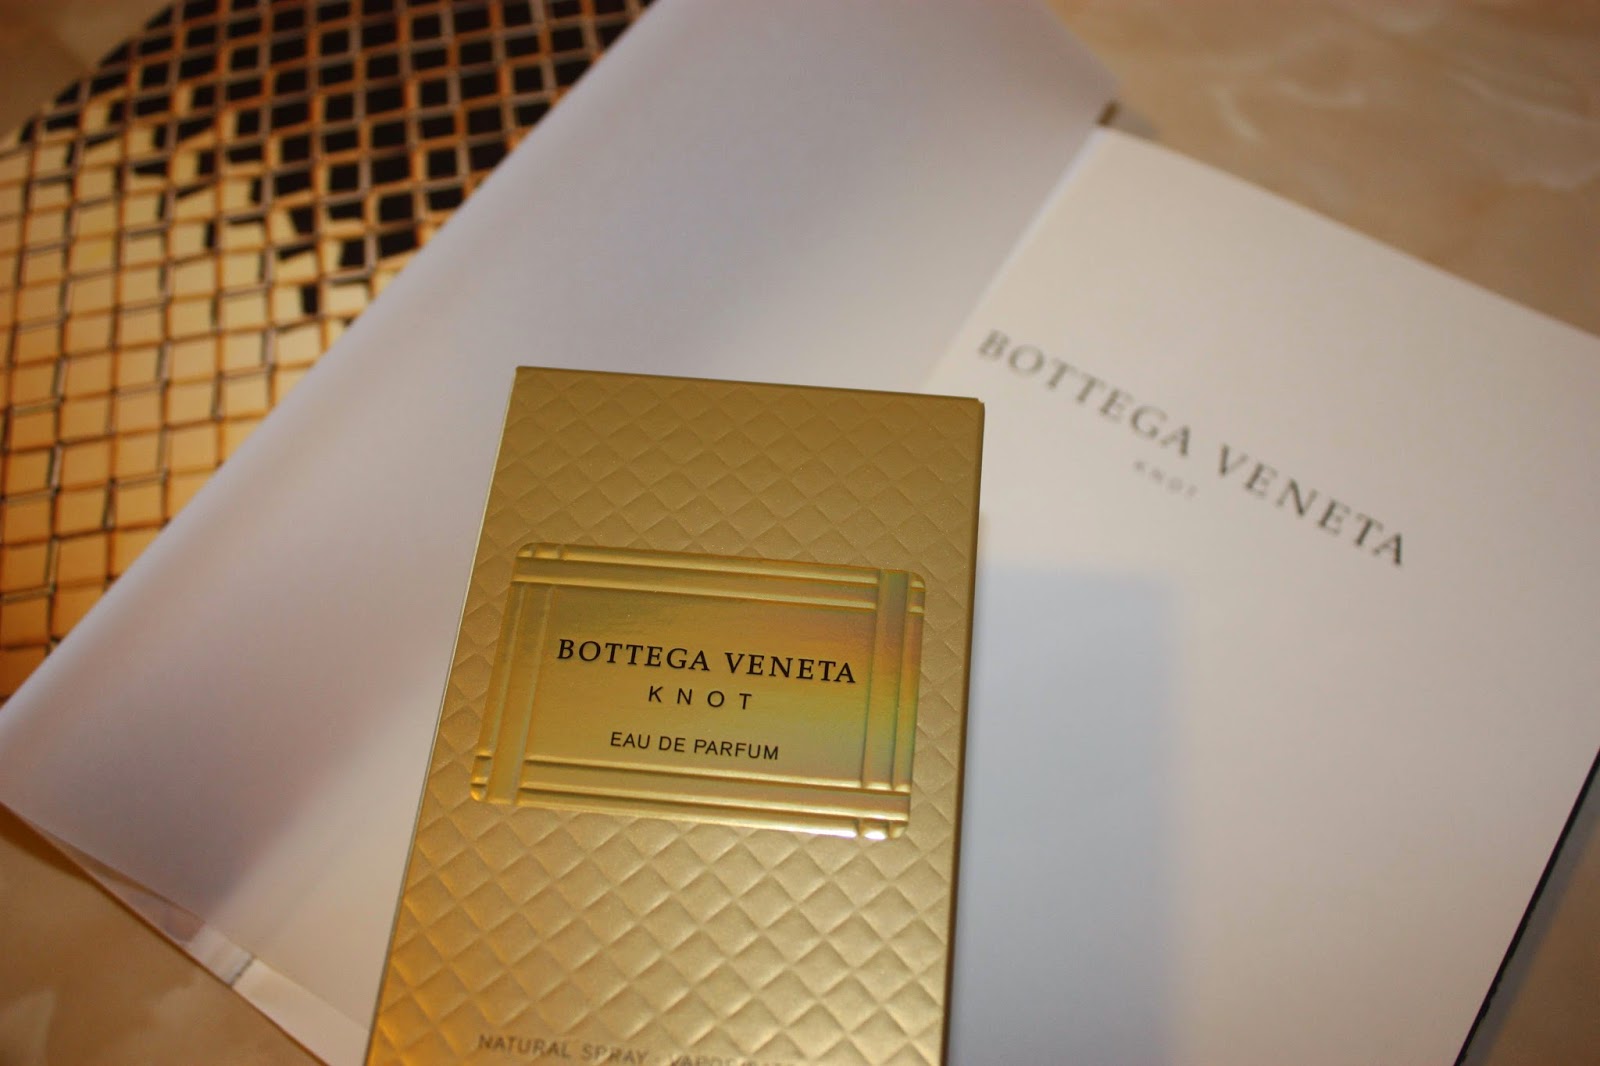 Smartologie: Bottega Veneta 'Knot' Fragrance Review